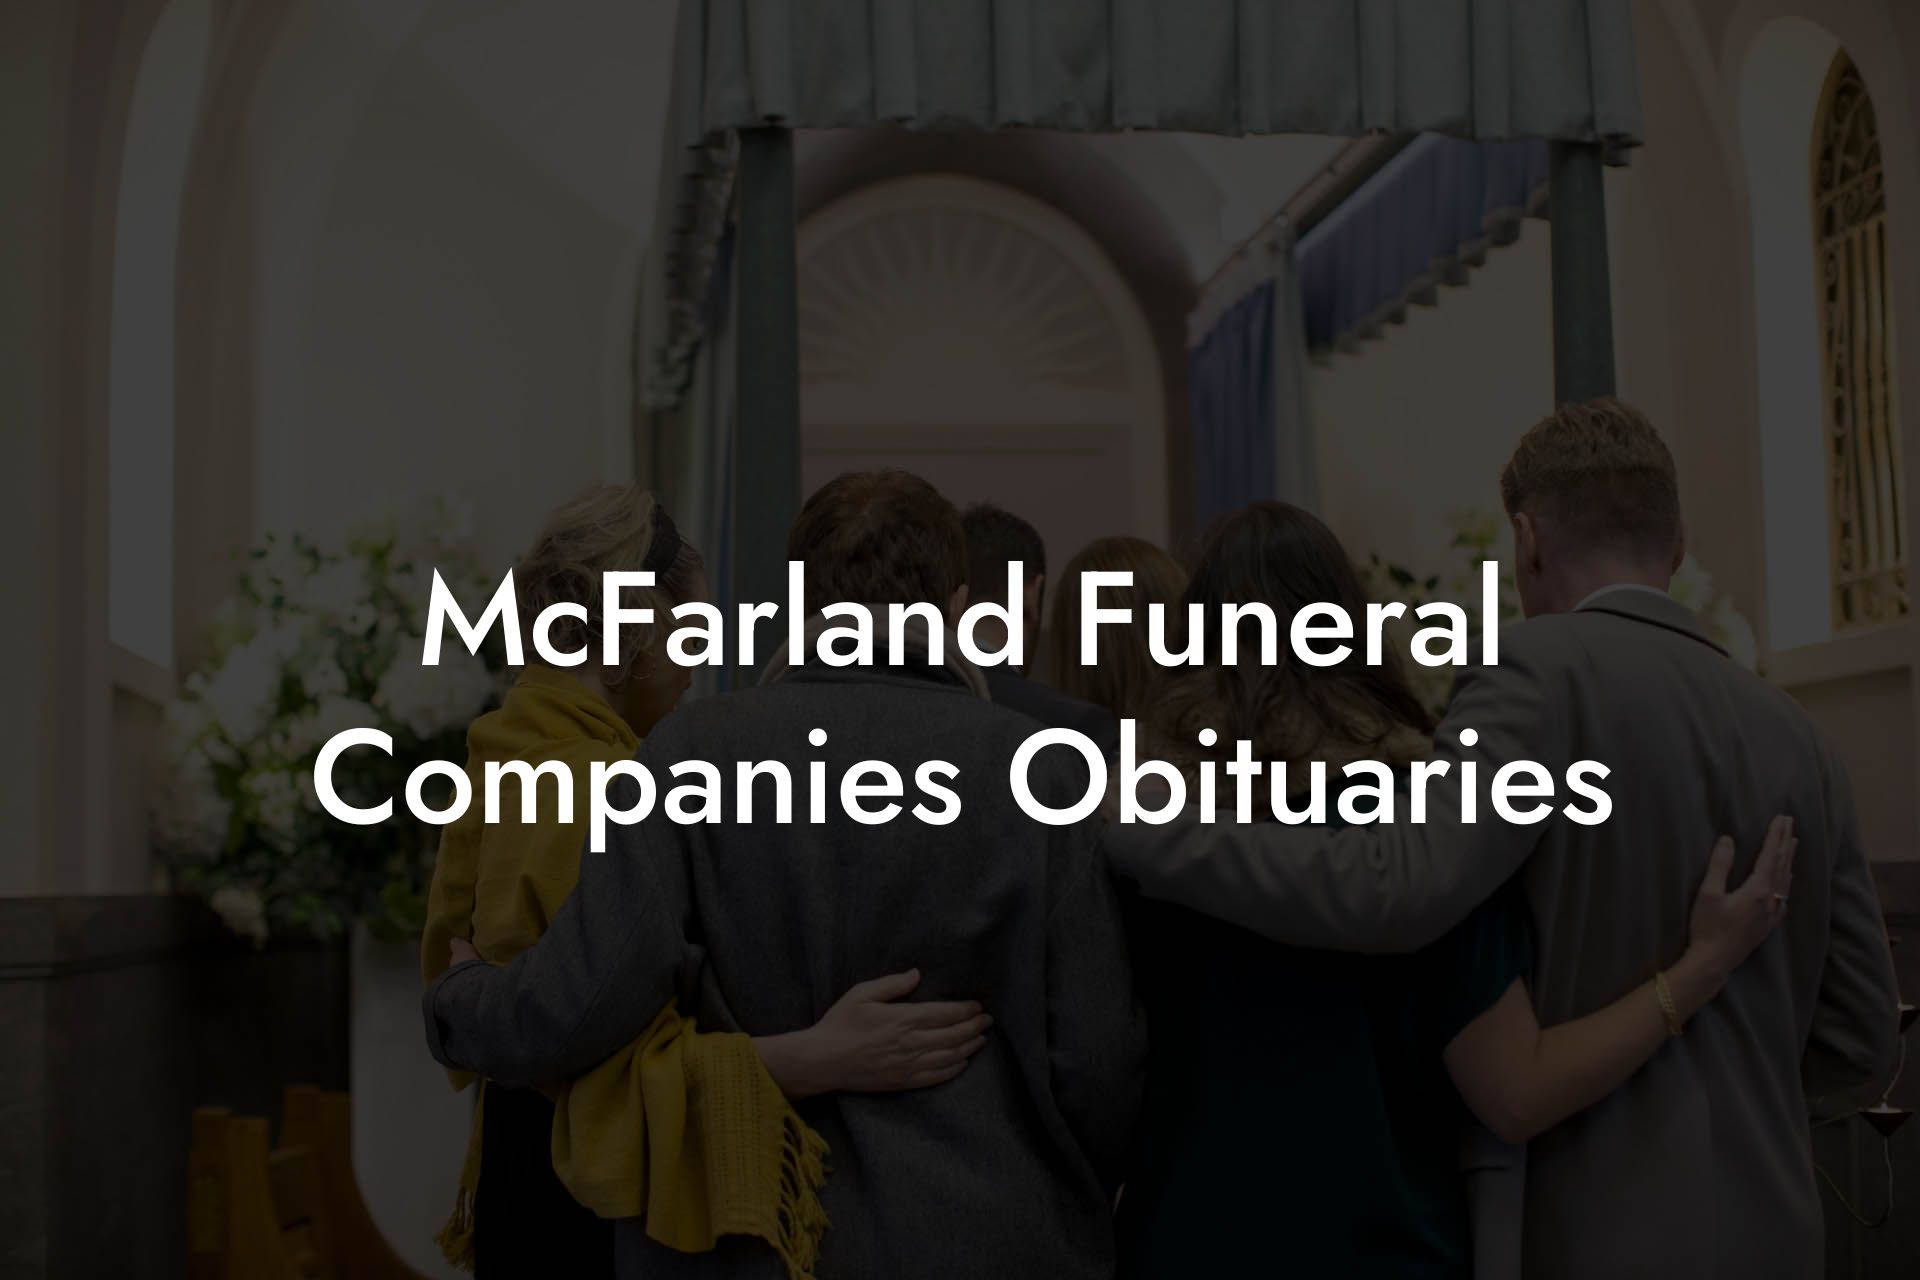 McFarland Funeral Companies Obituaries